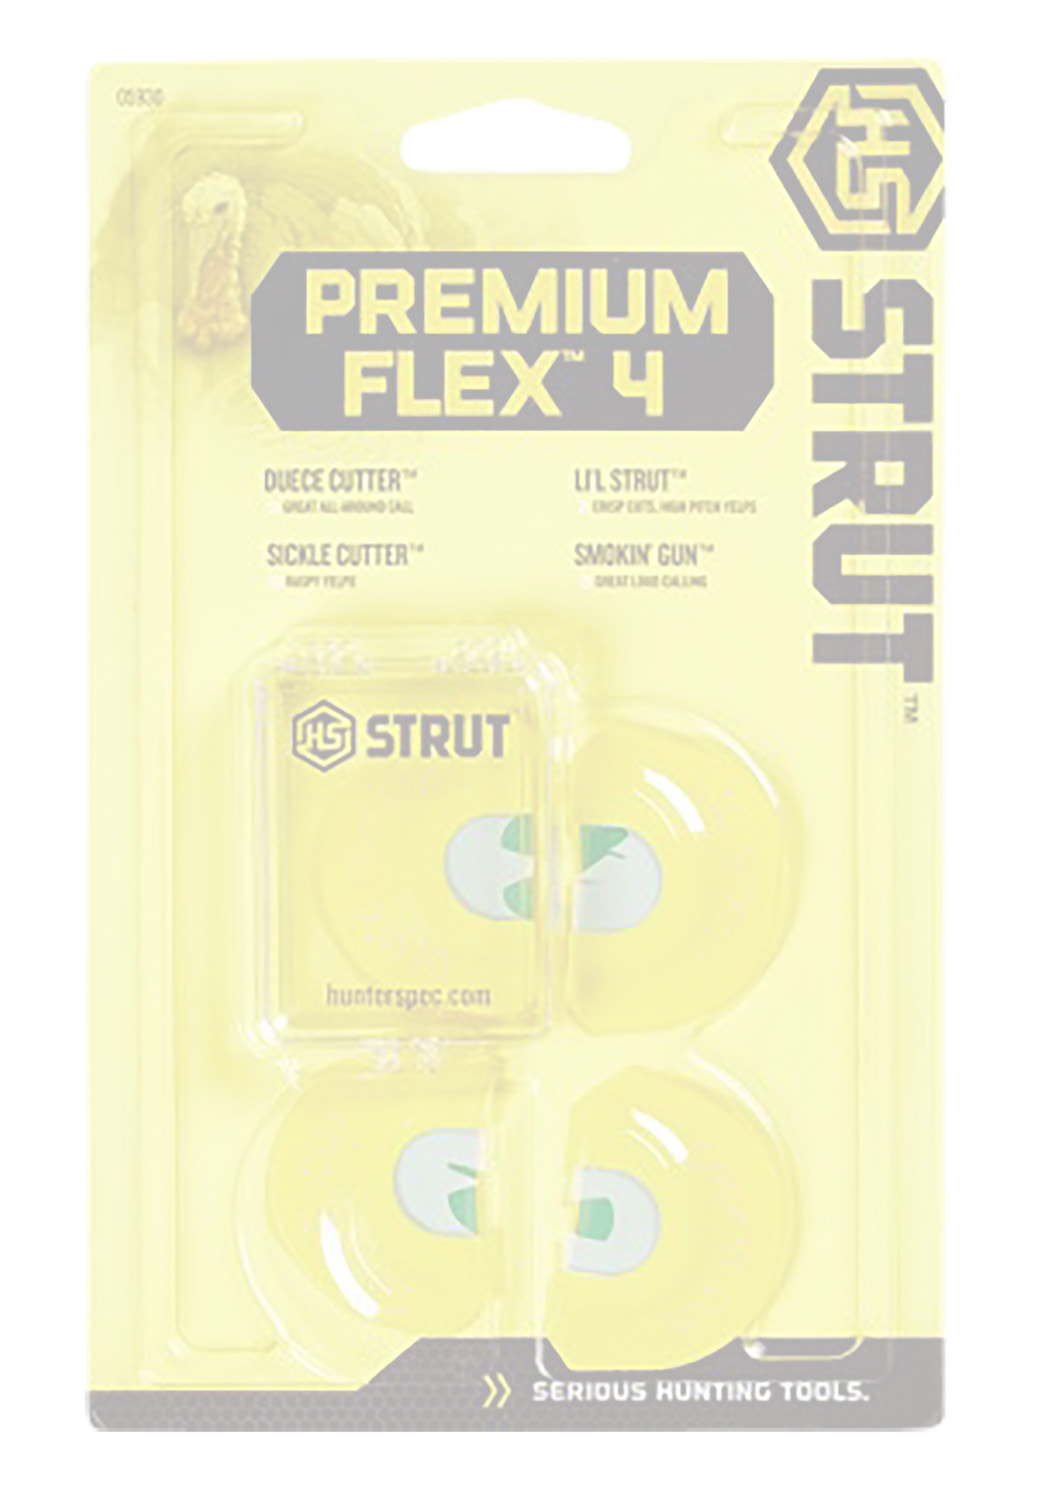 Hs Strut STR05930 Premium Flex 4 Diaphragm Call Attracts Turkey Species Yellow Contains 4 Calls